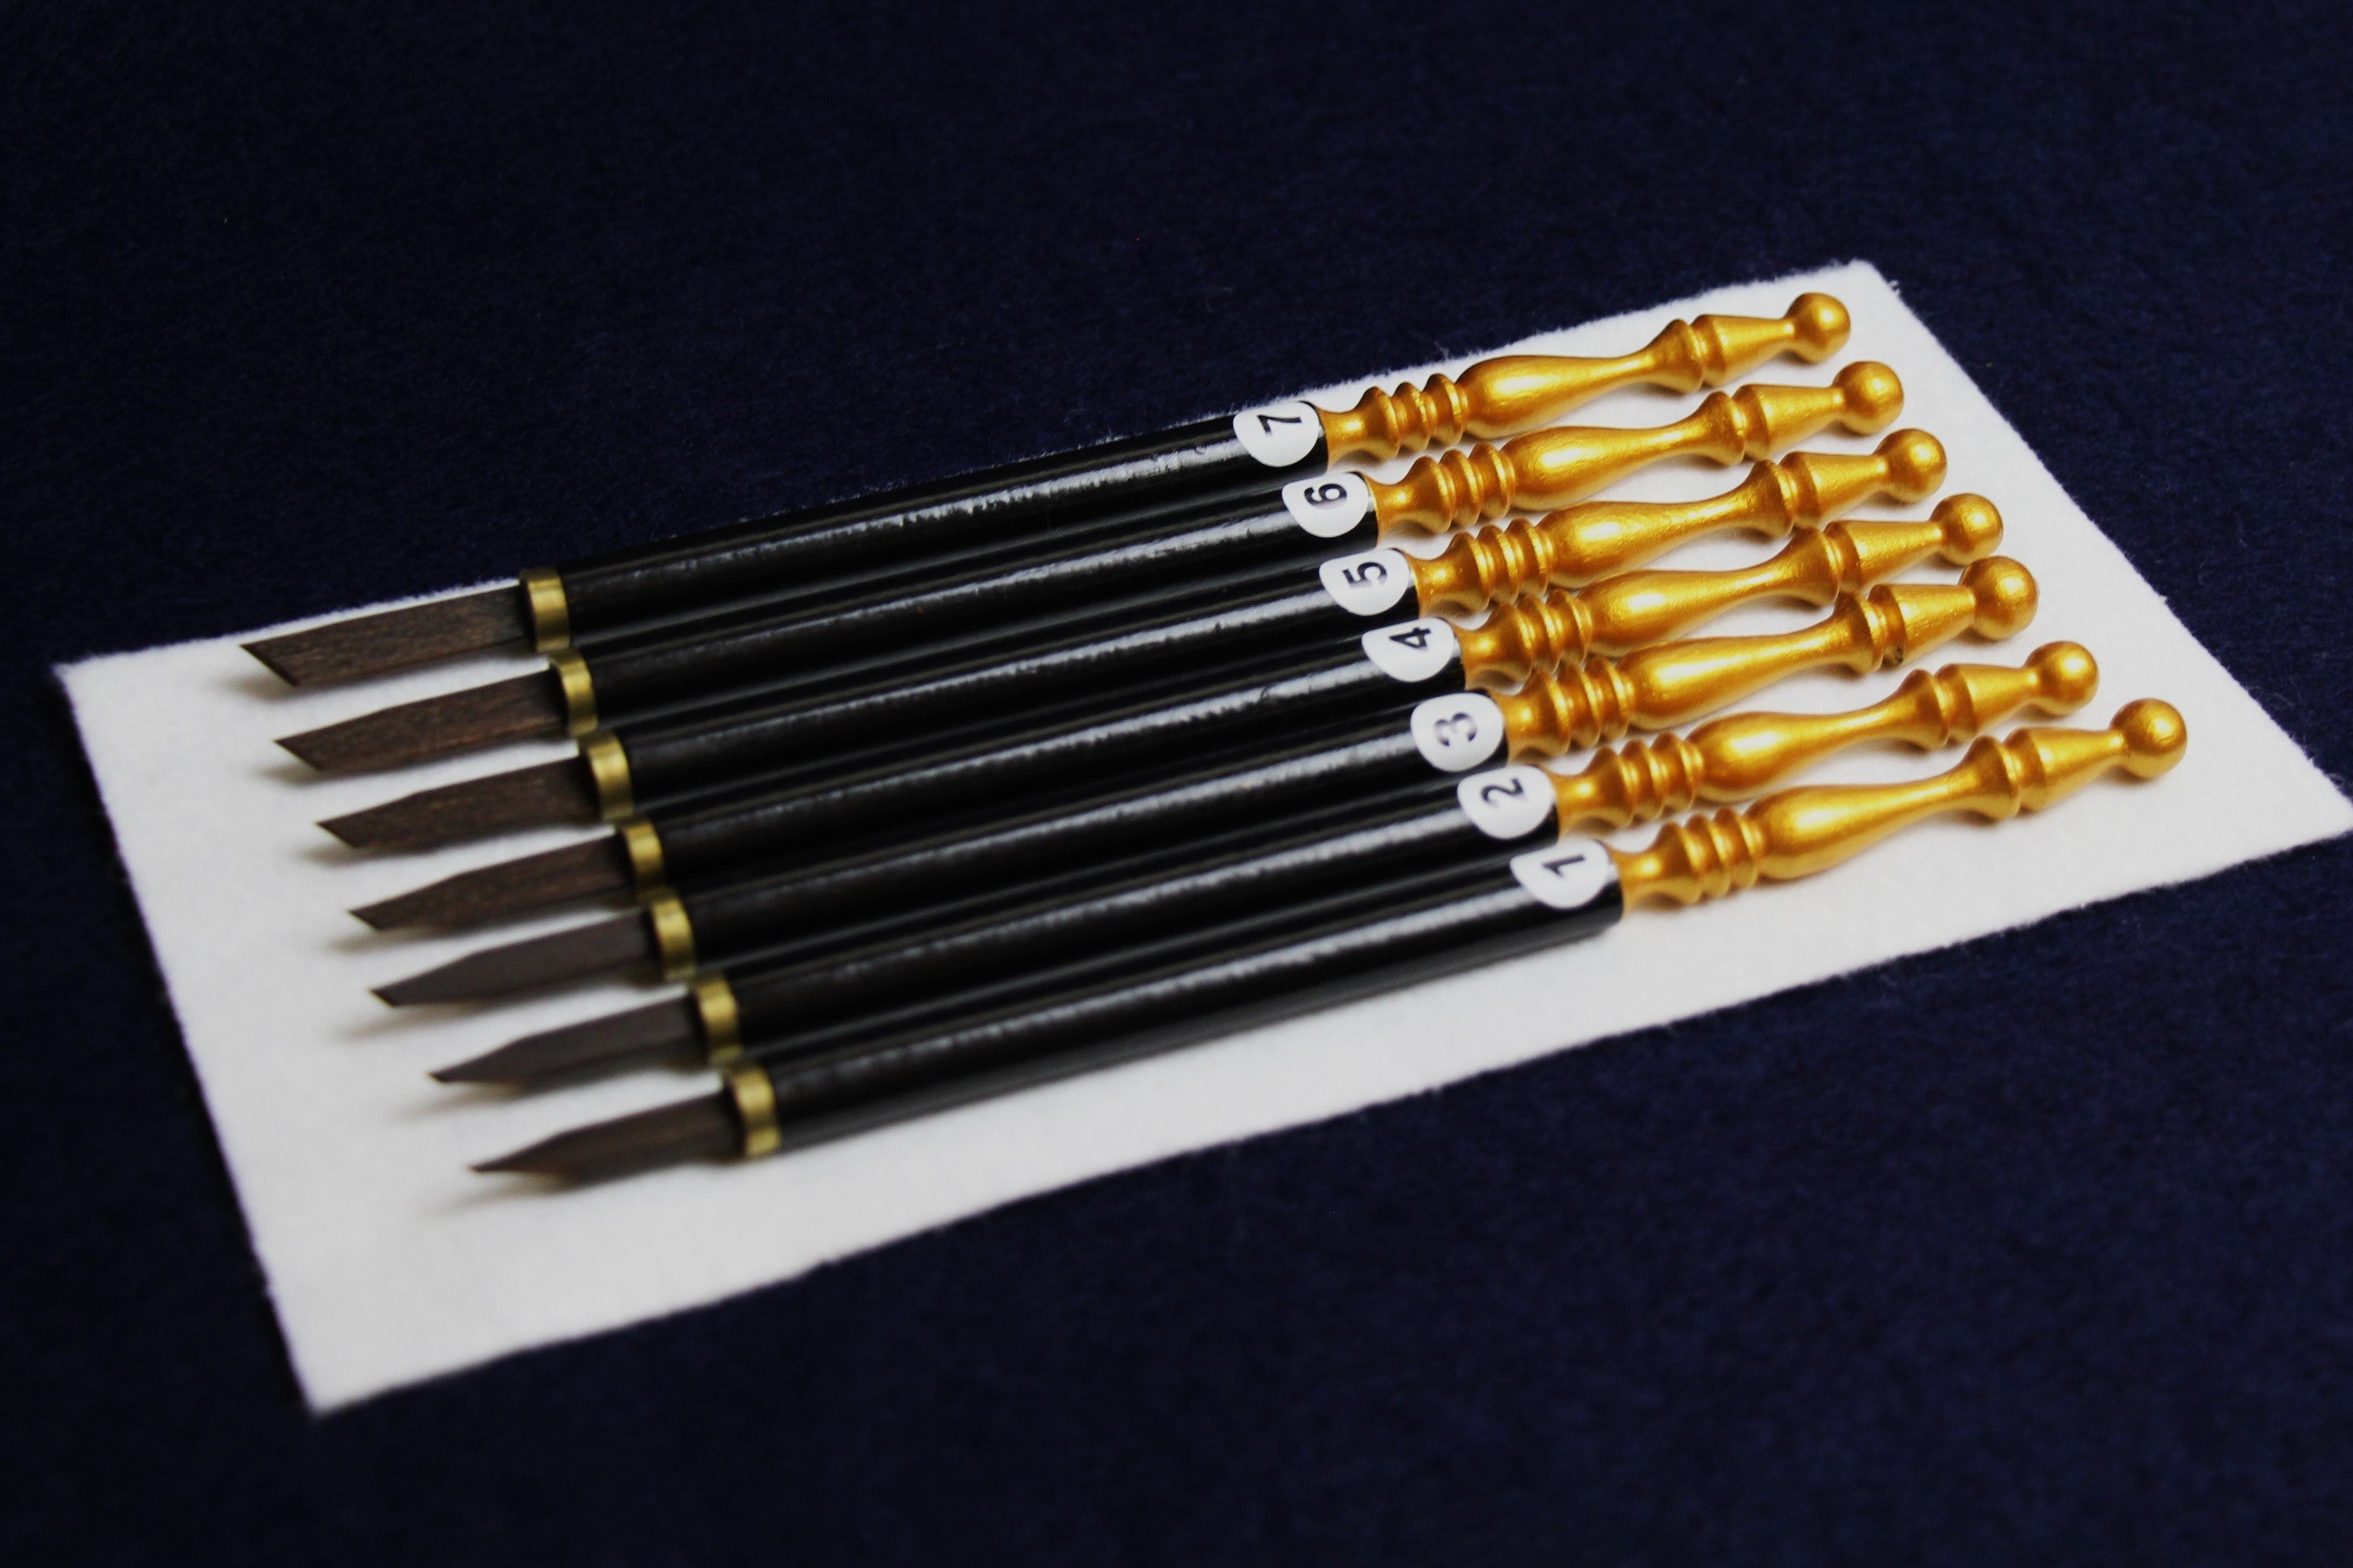 Set of 7 Javi qalam pens for Arabic calligraphy: 1 - 7 mm black and gold handle